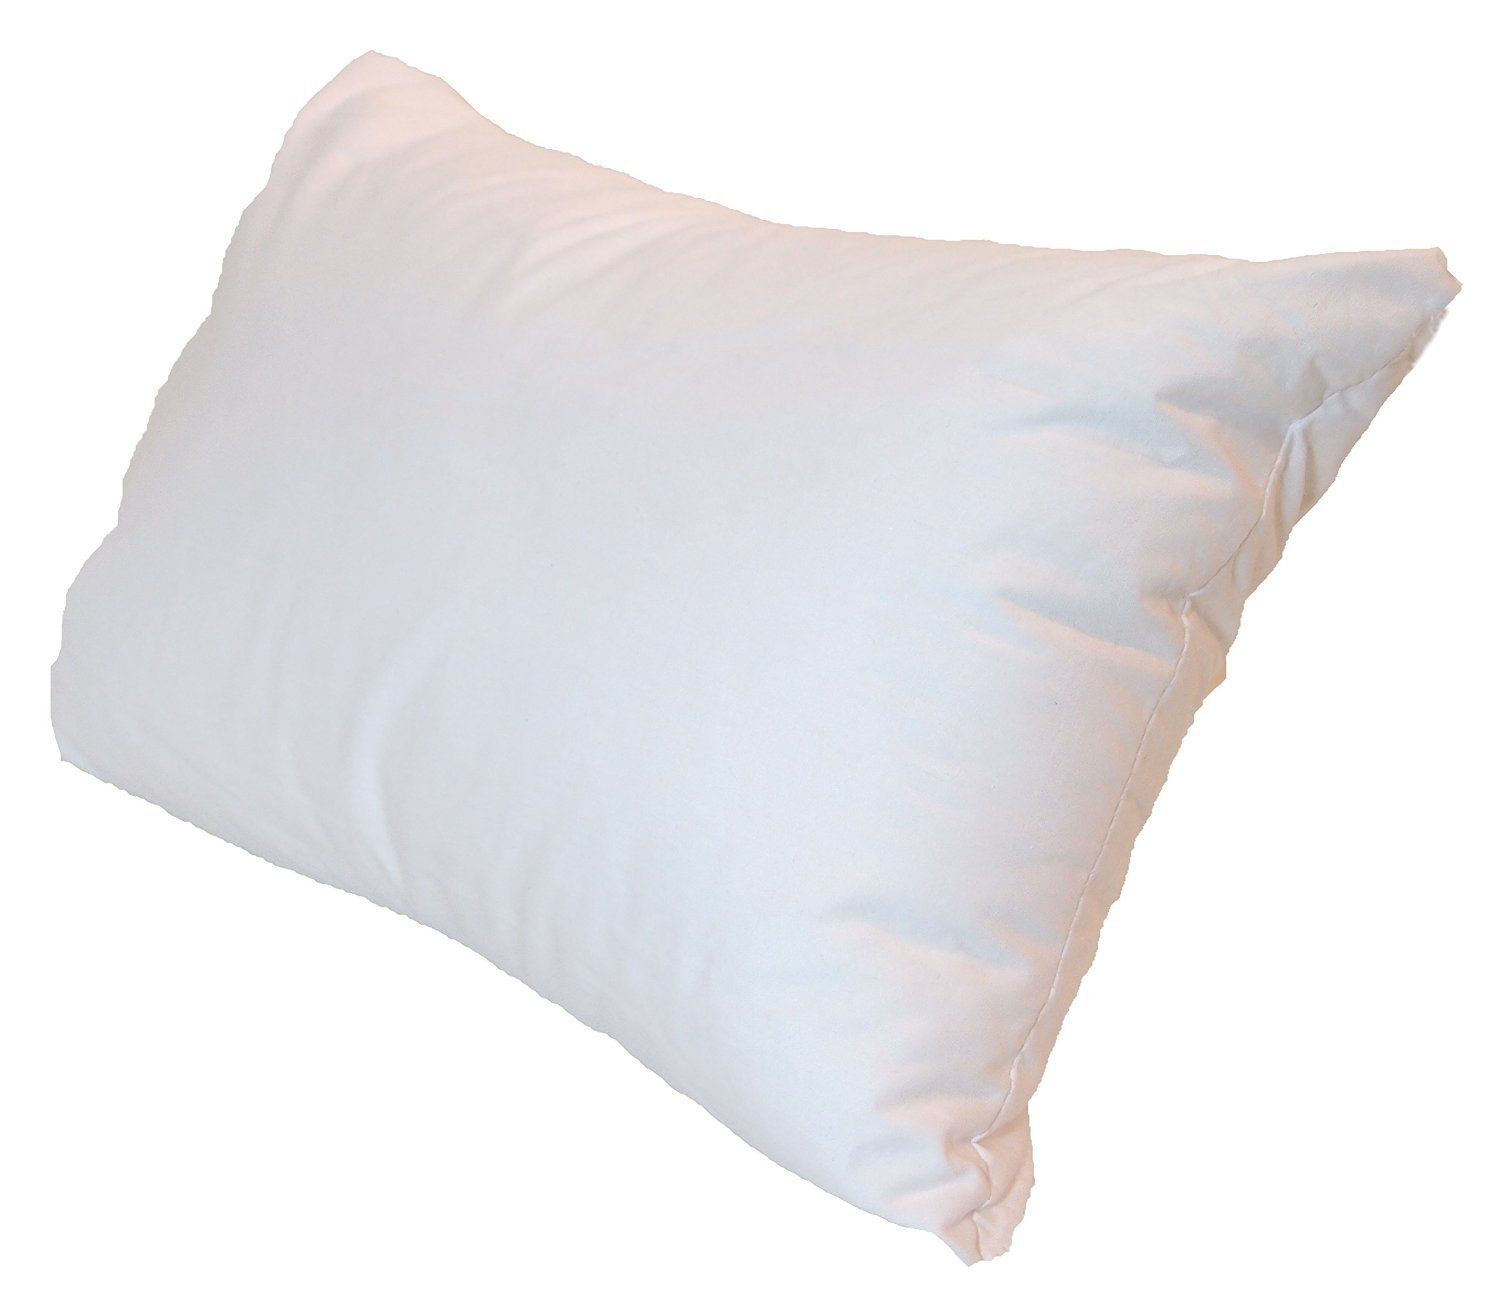 Wholesale & Dropship Pillow Insert